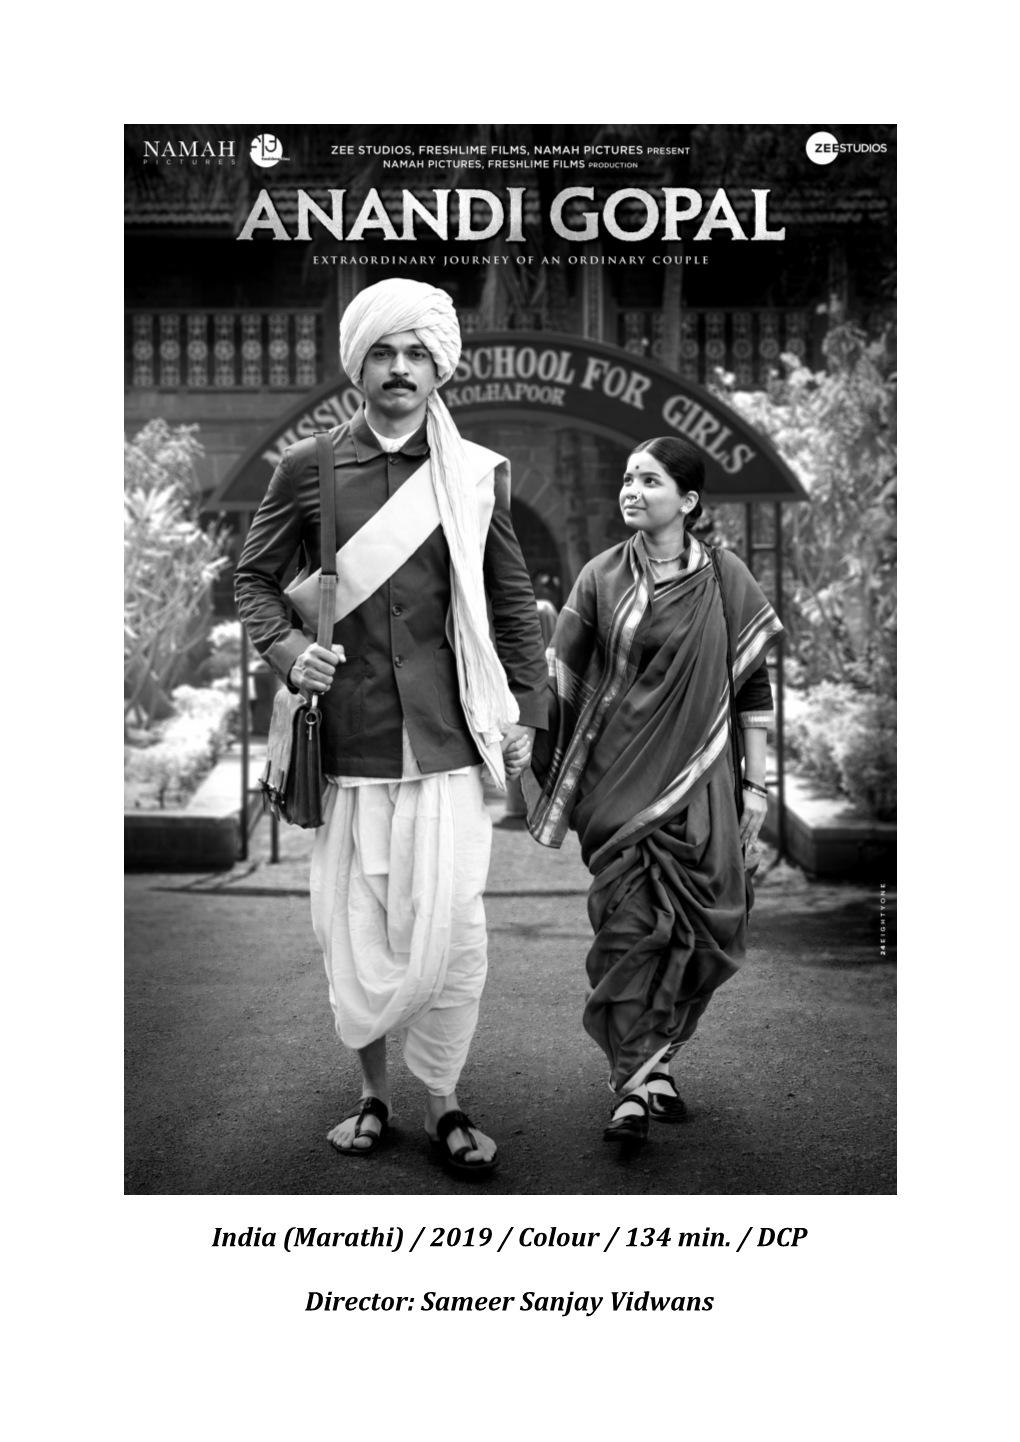 ANANDI GOPAL India (Marathi) / 2019 / Colour / 134 Min